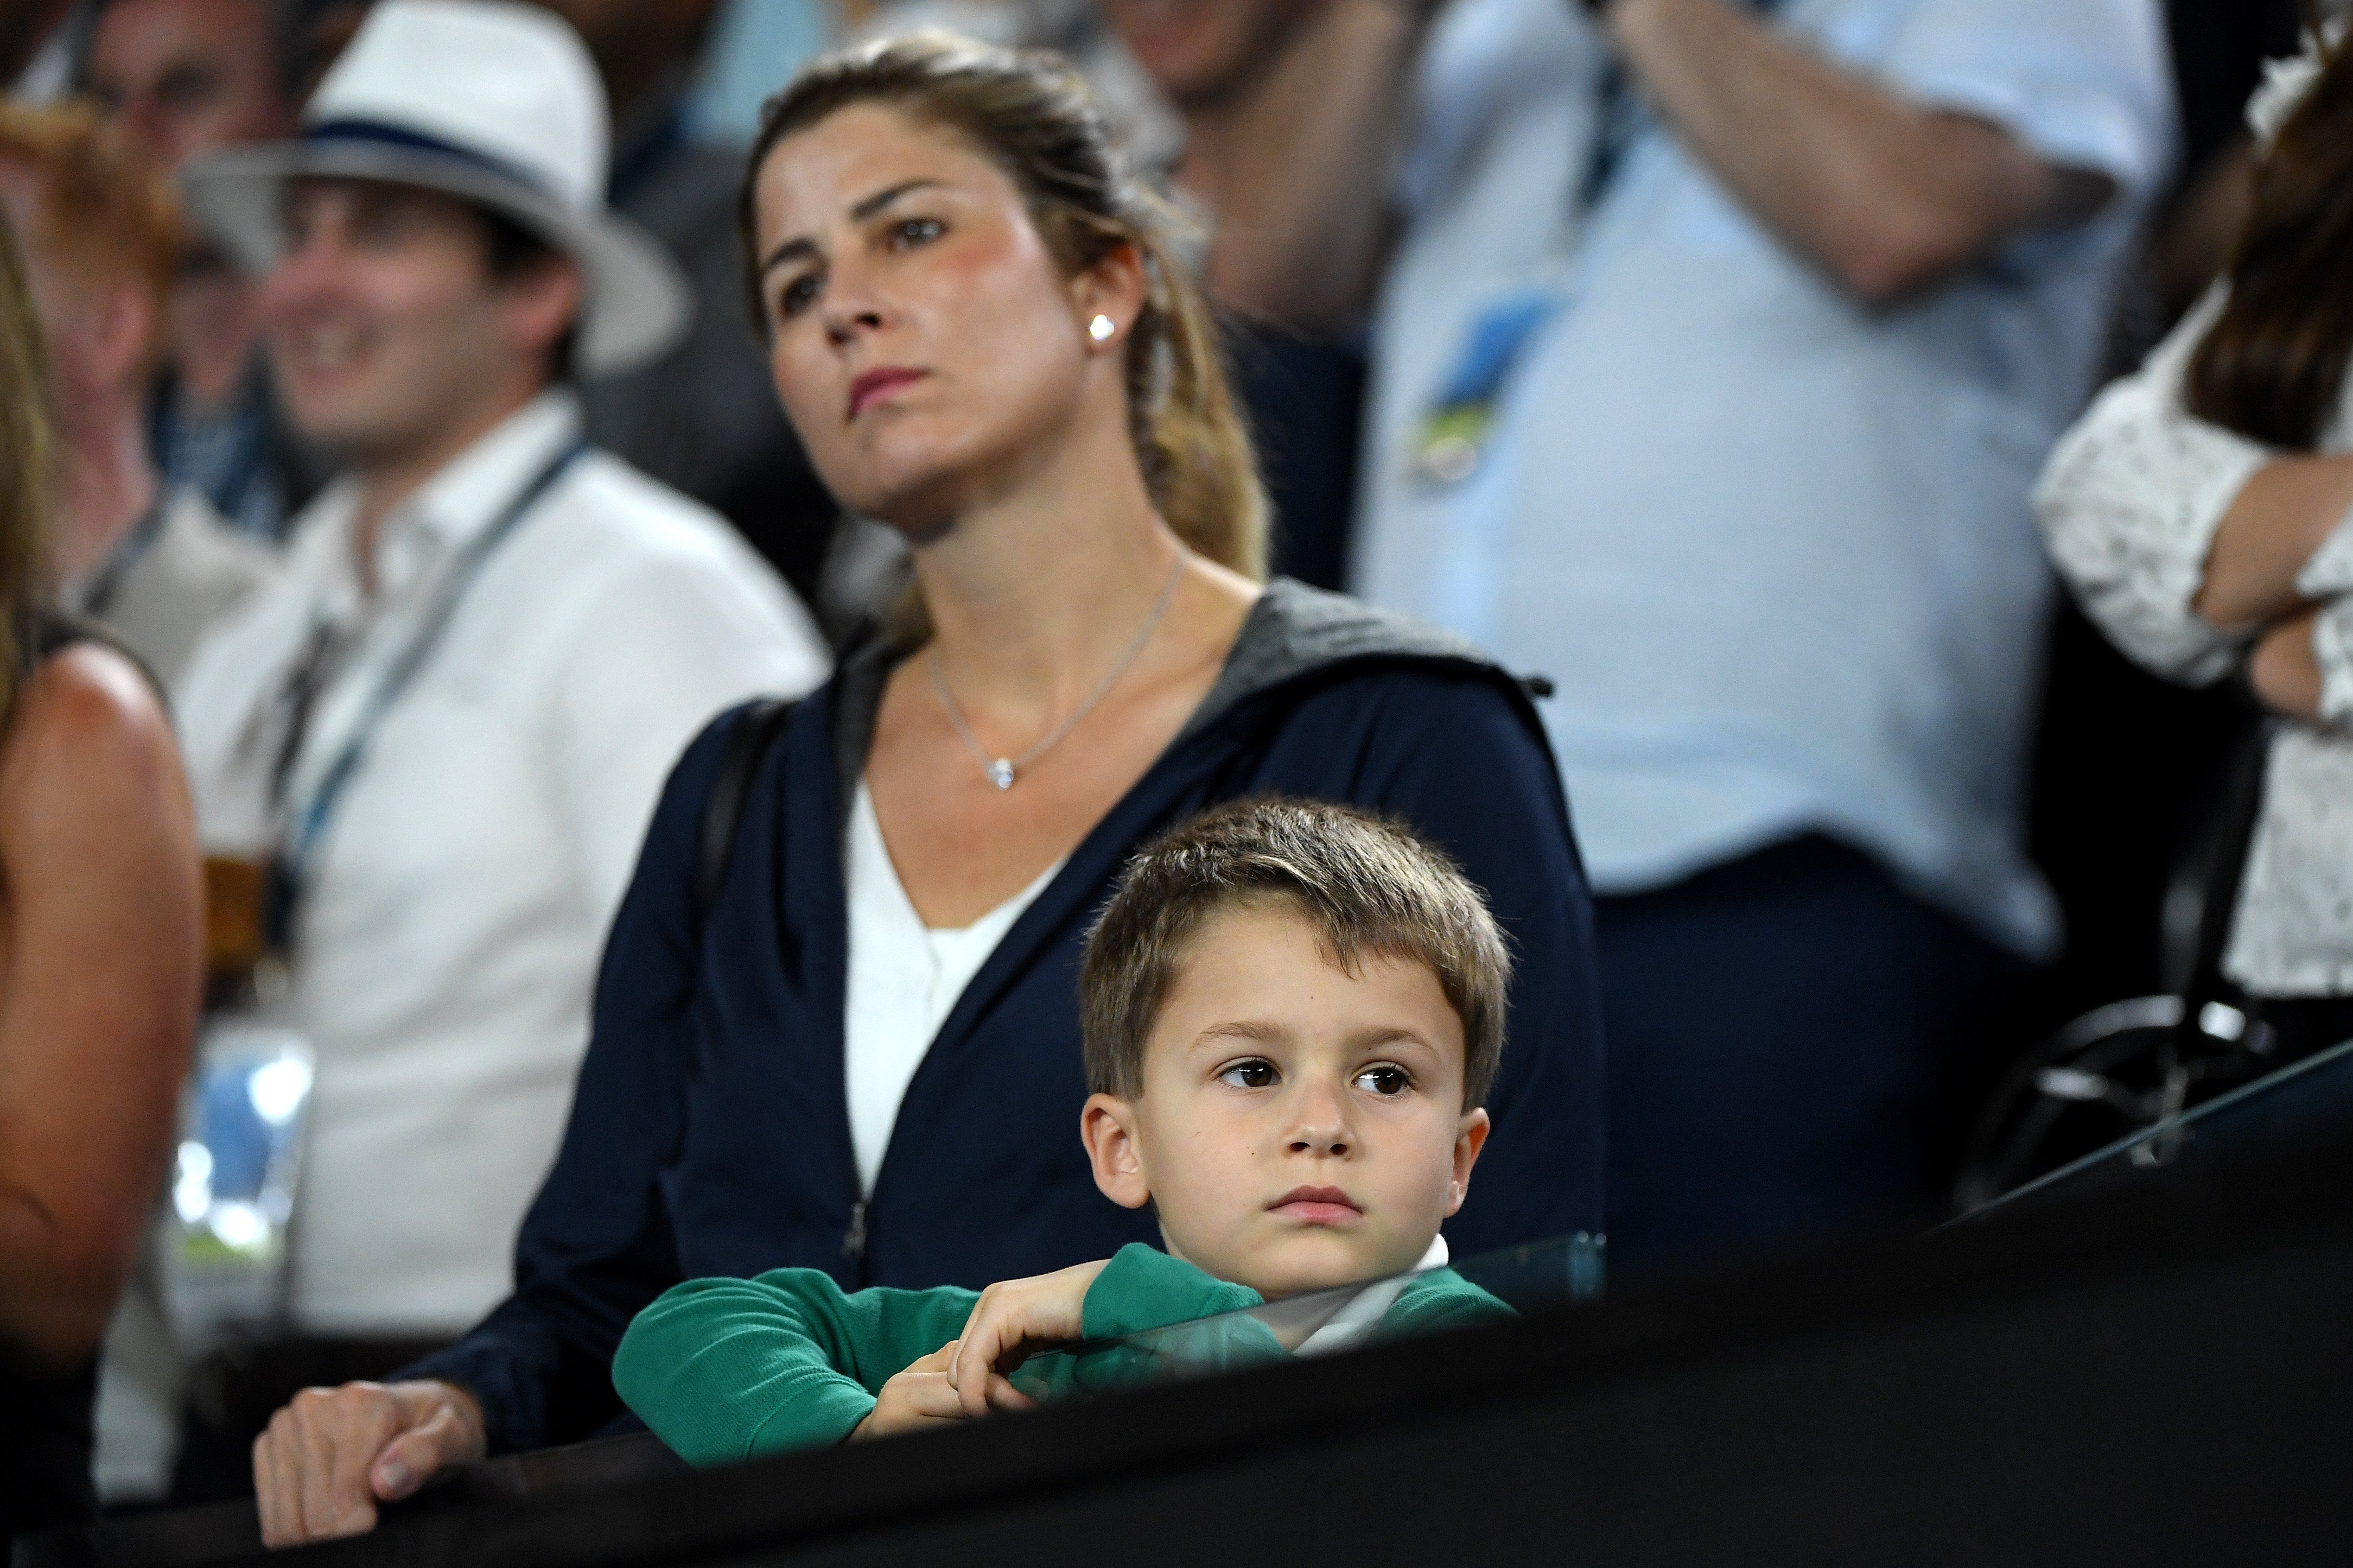 Mirka Federer with her son, Lennert "Lenny" Federer, at the 2020 Australian Open on January 20, 2020, in Melbourne, Australia. | Source: Getty Images